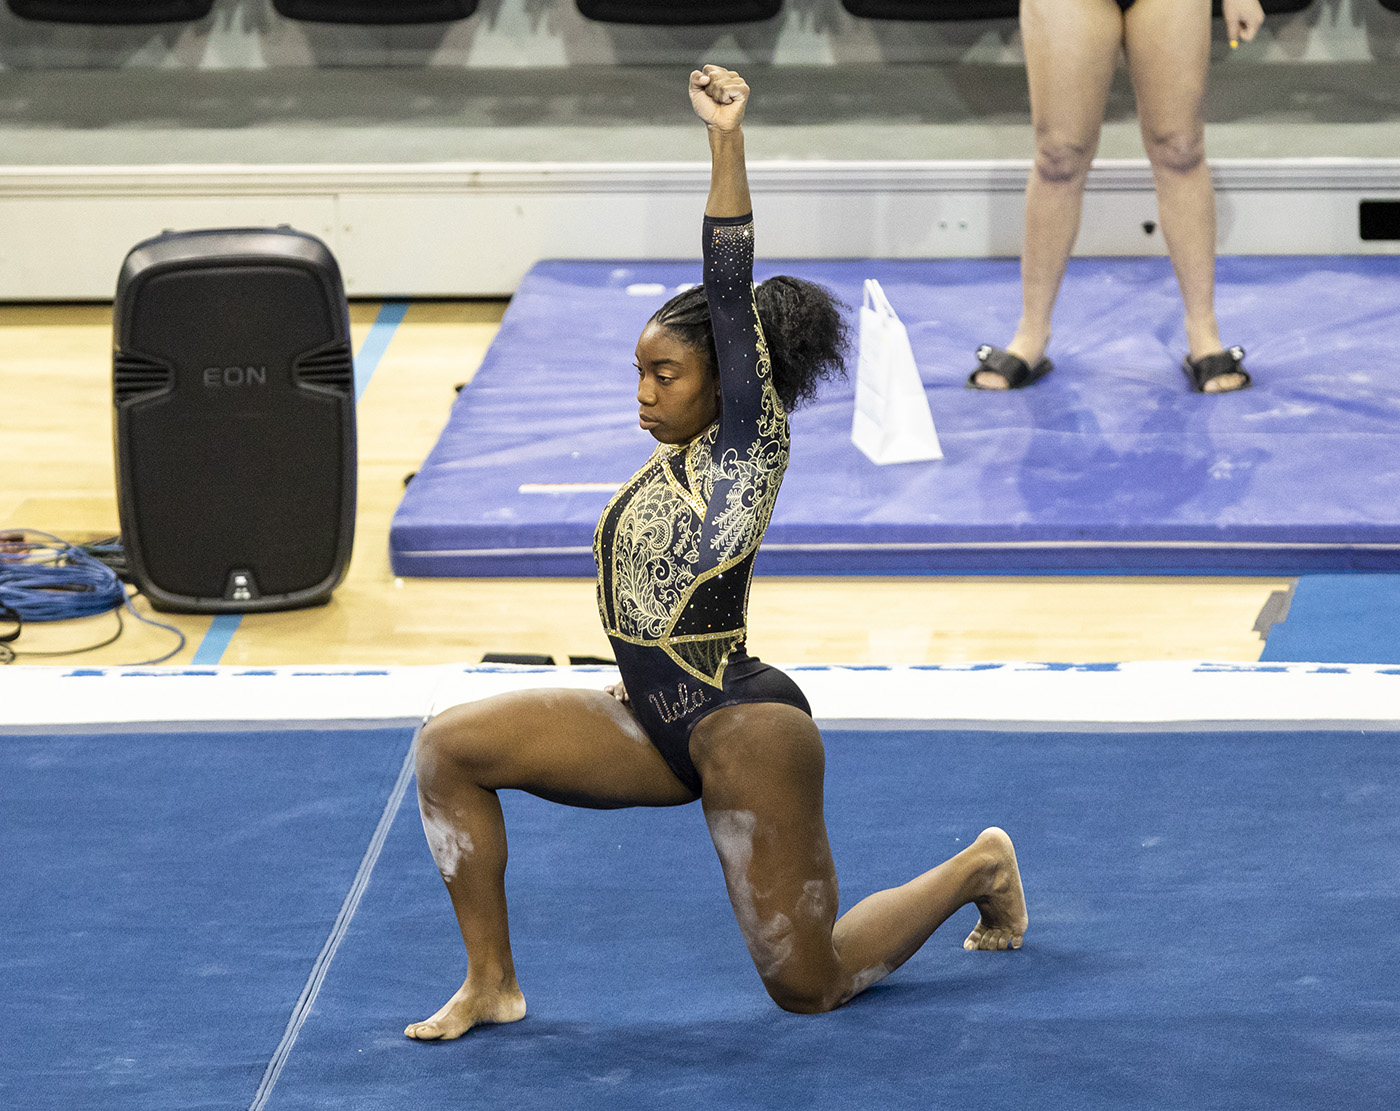 UCLA gymnastics’ Black Excellence meet displays messages of diversity